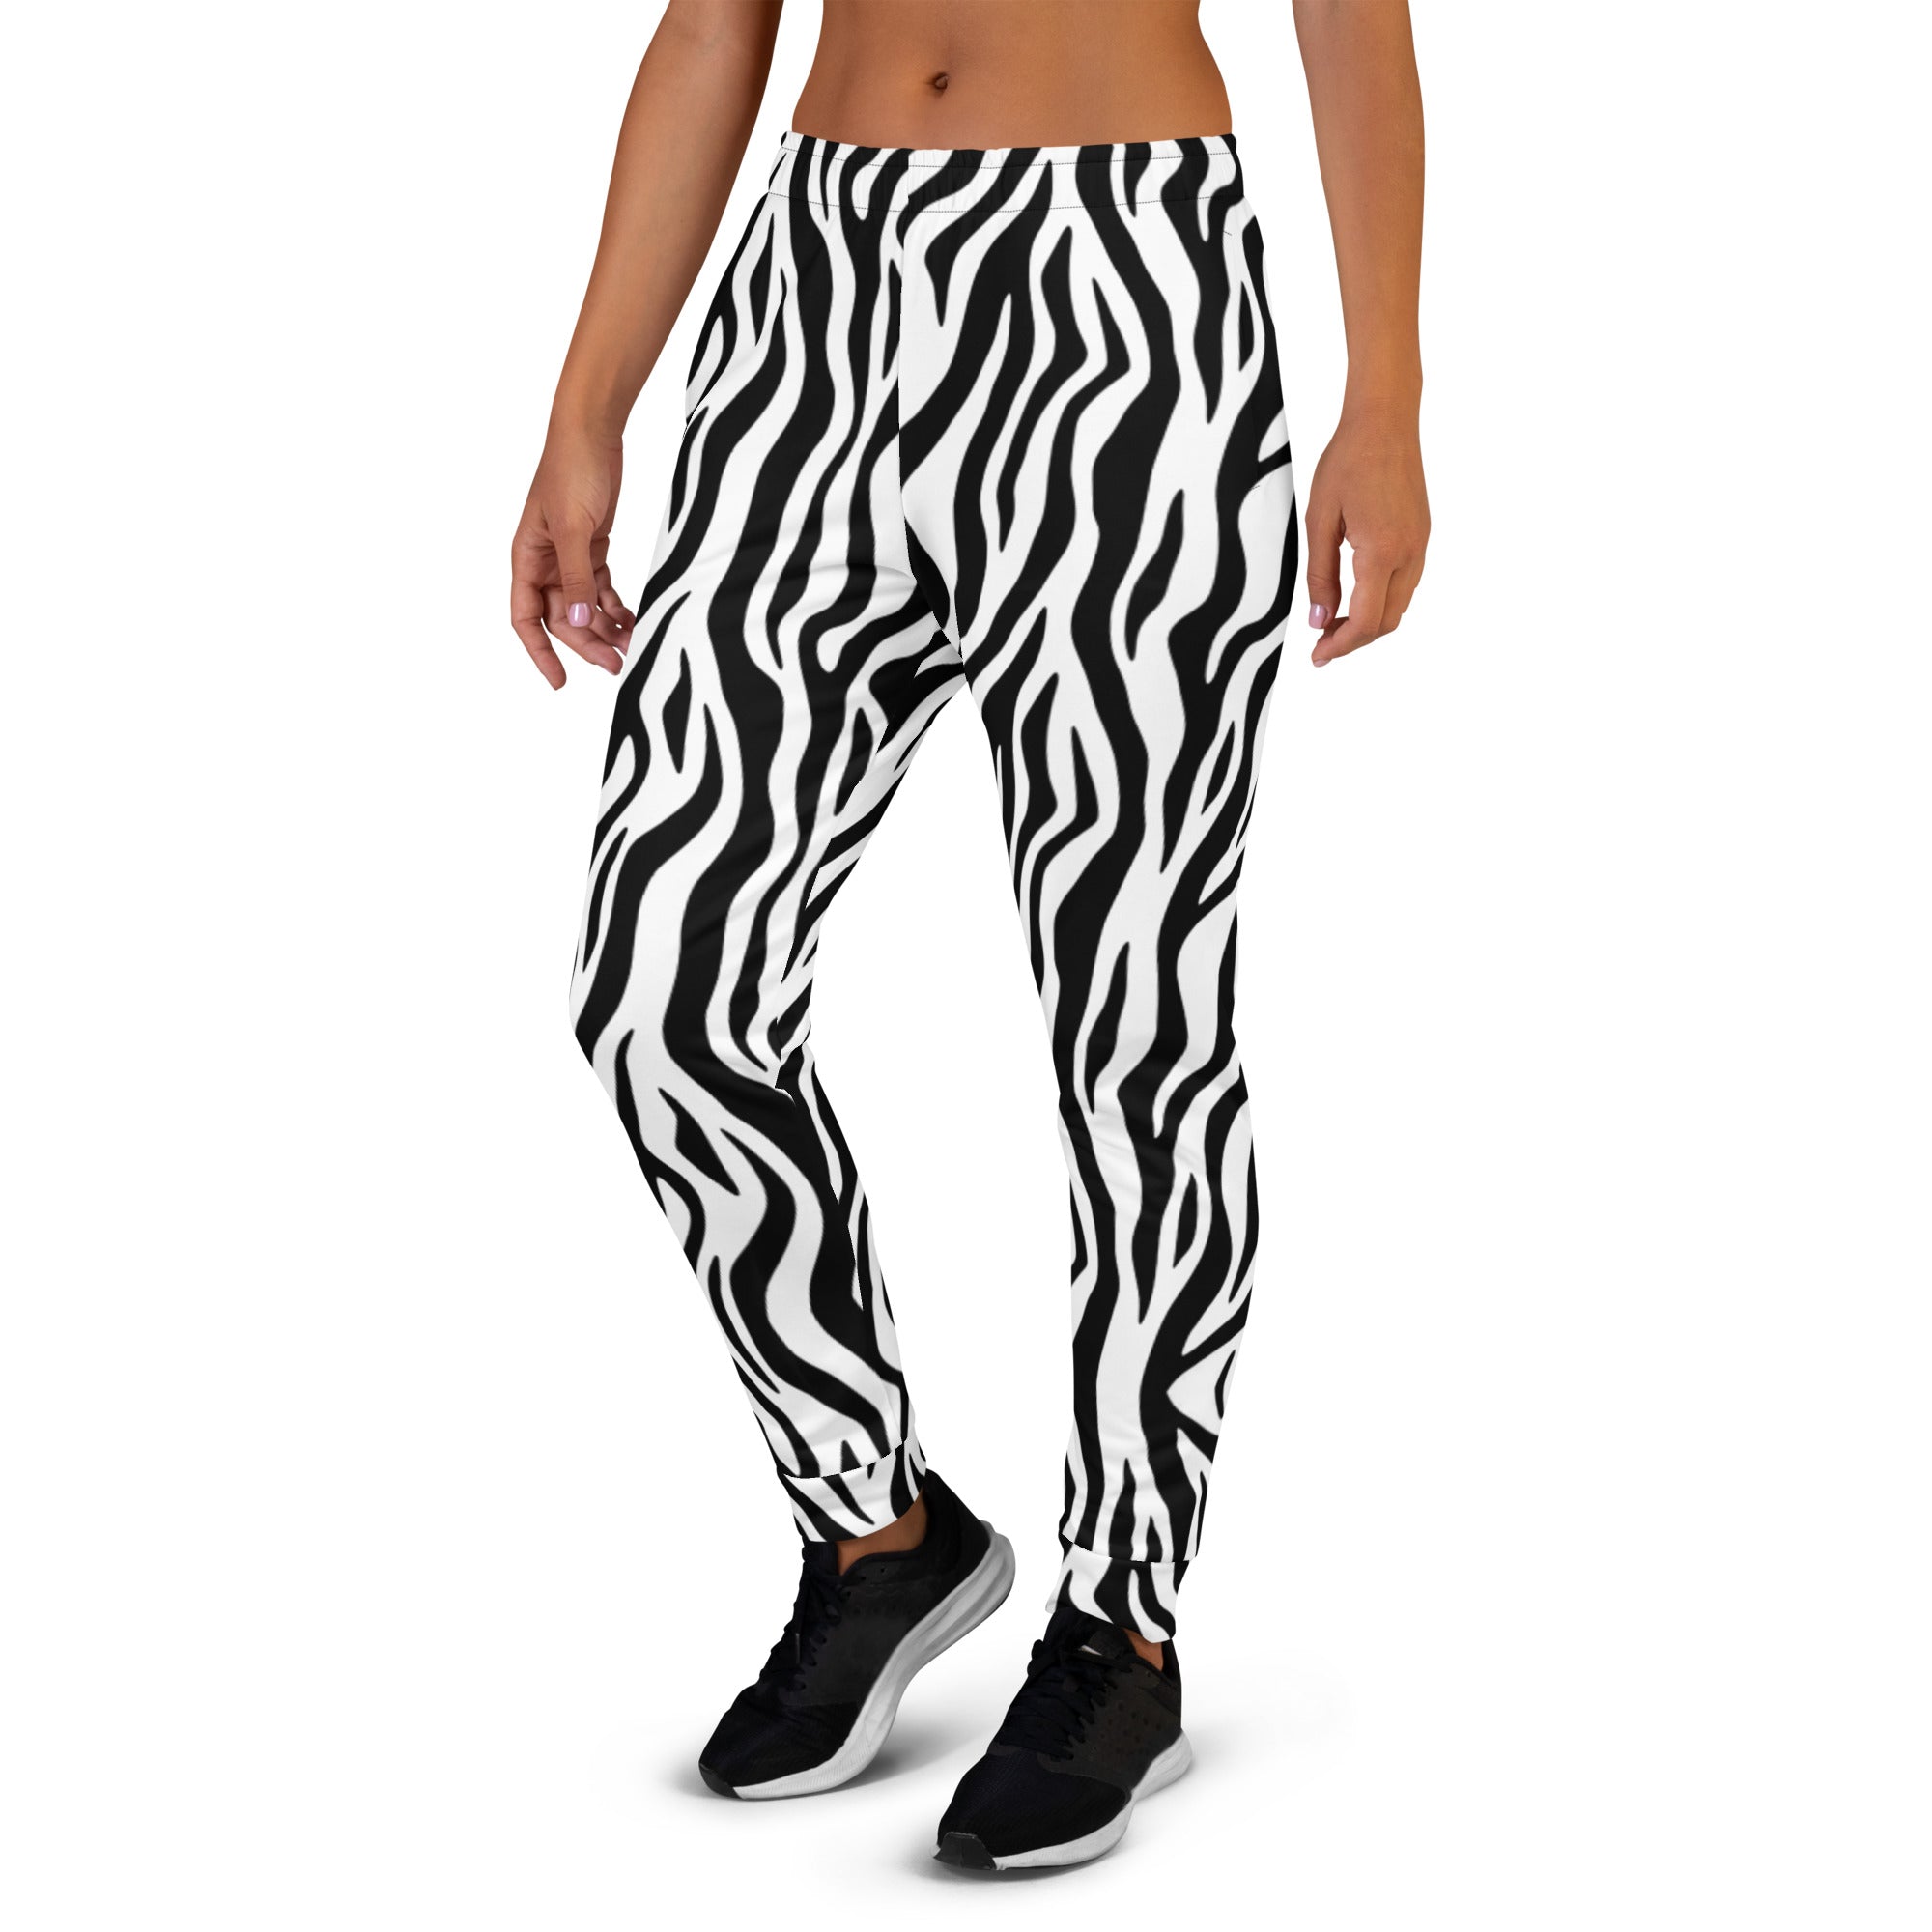 Zebra Stripe Women's Slim FIt Joggers